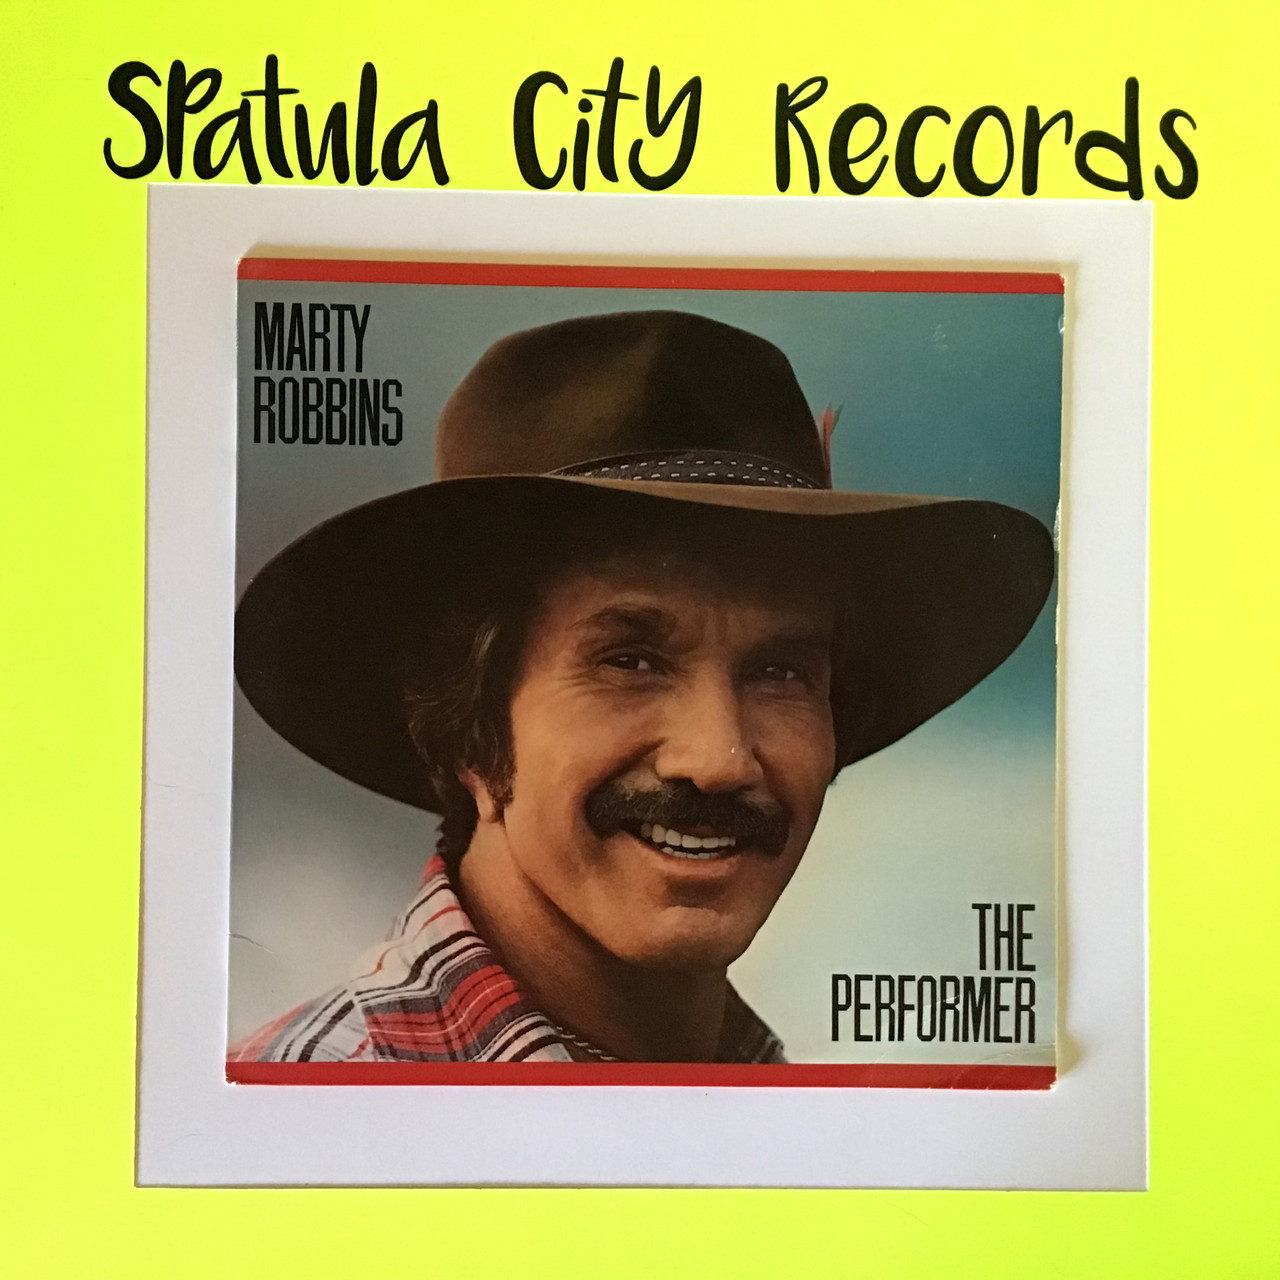 Marty Robbins - The Performer - vinyl record album LP